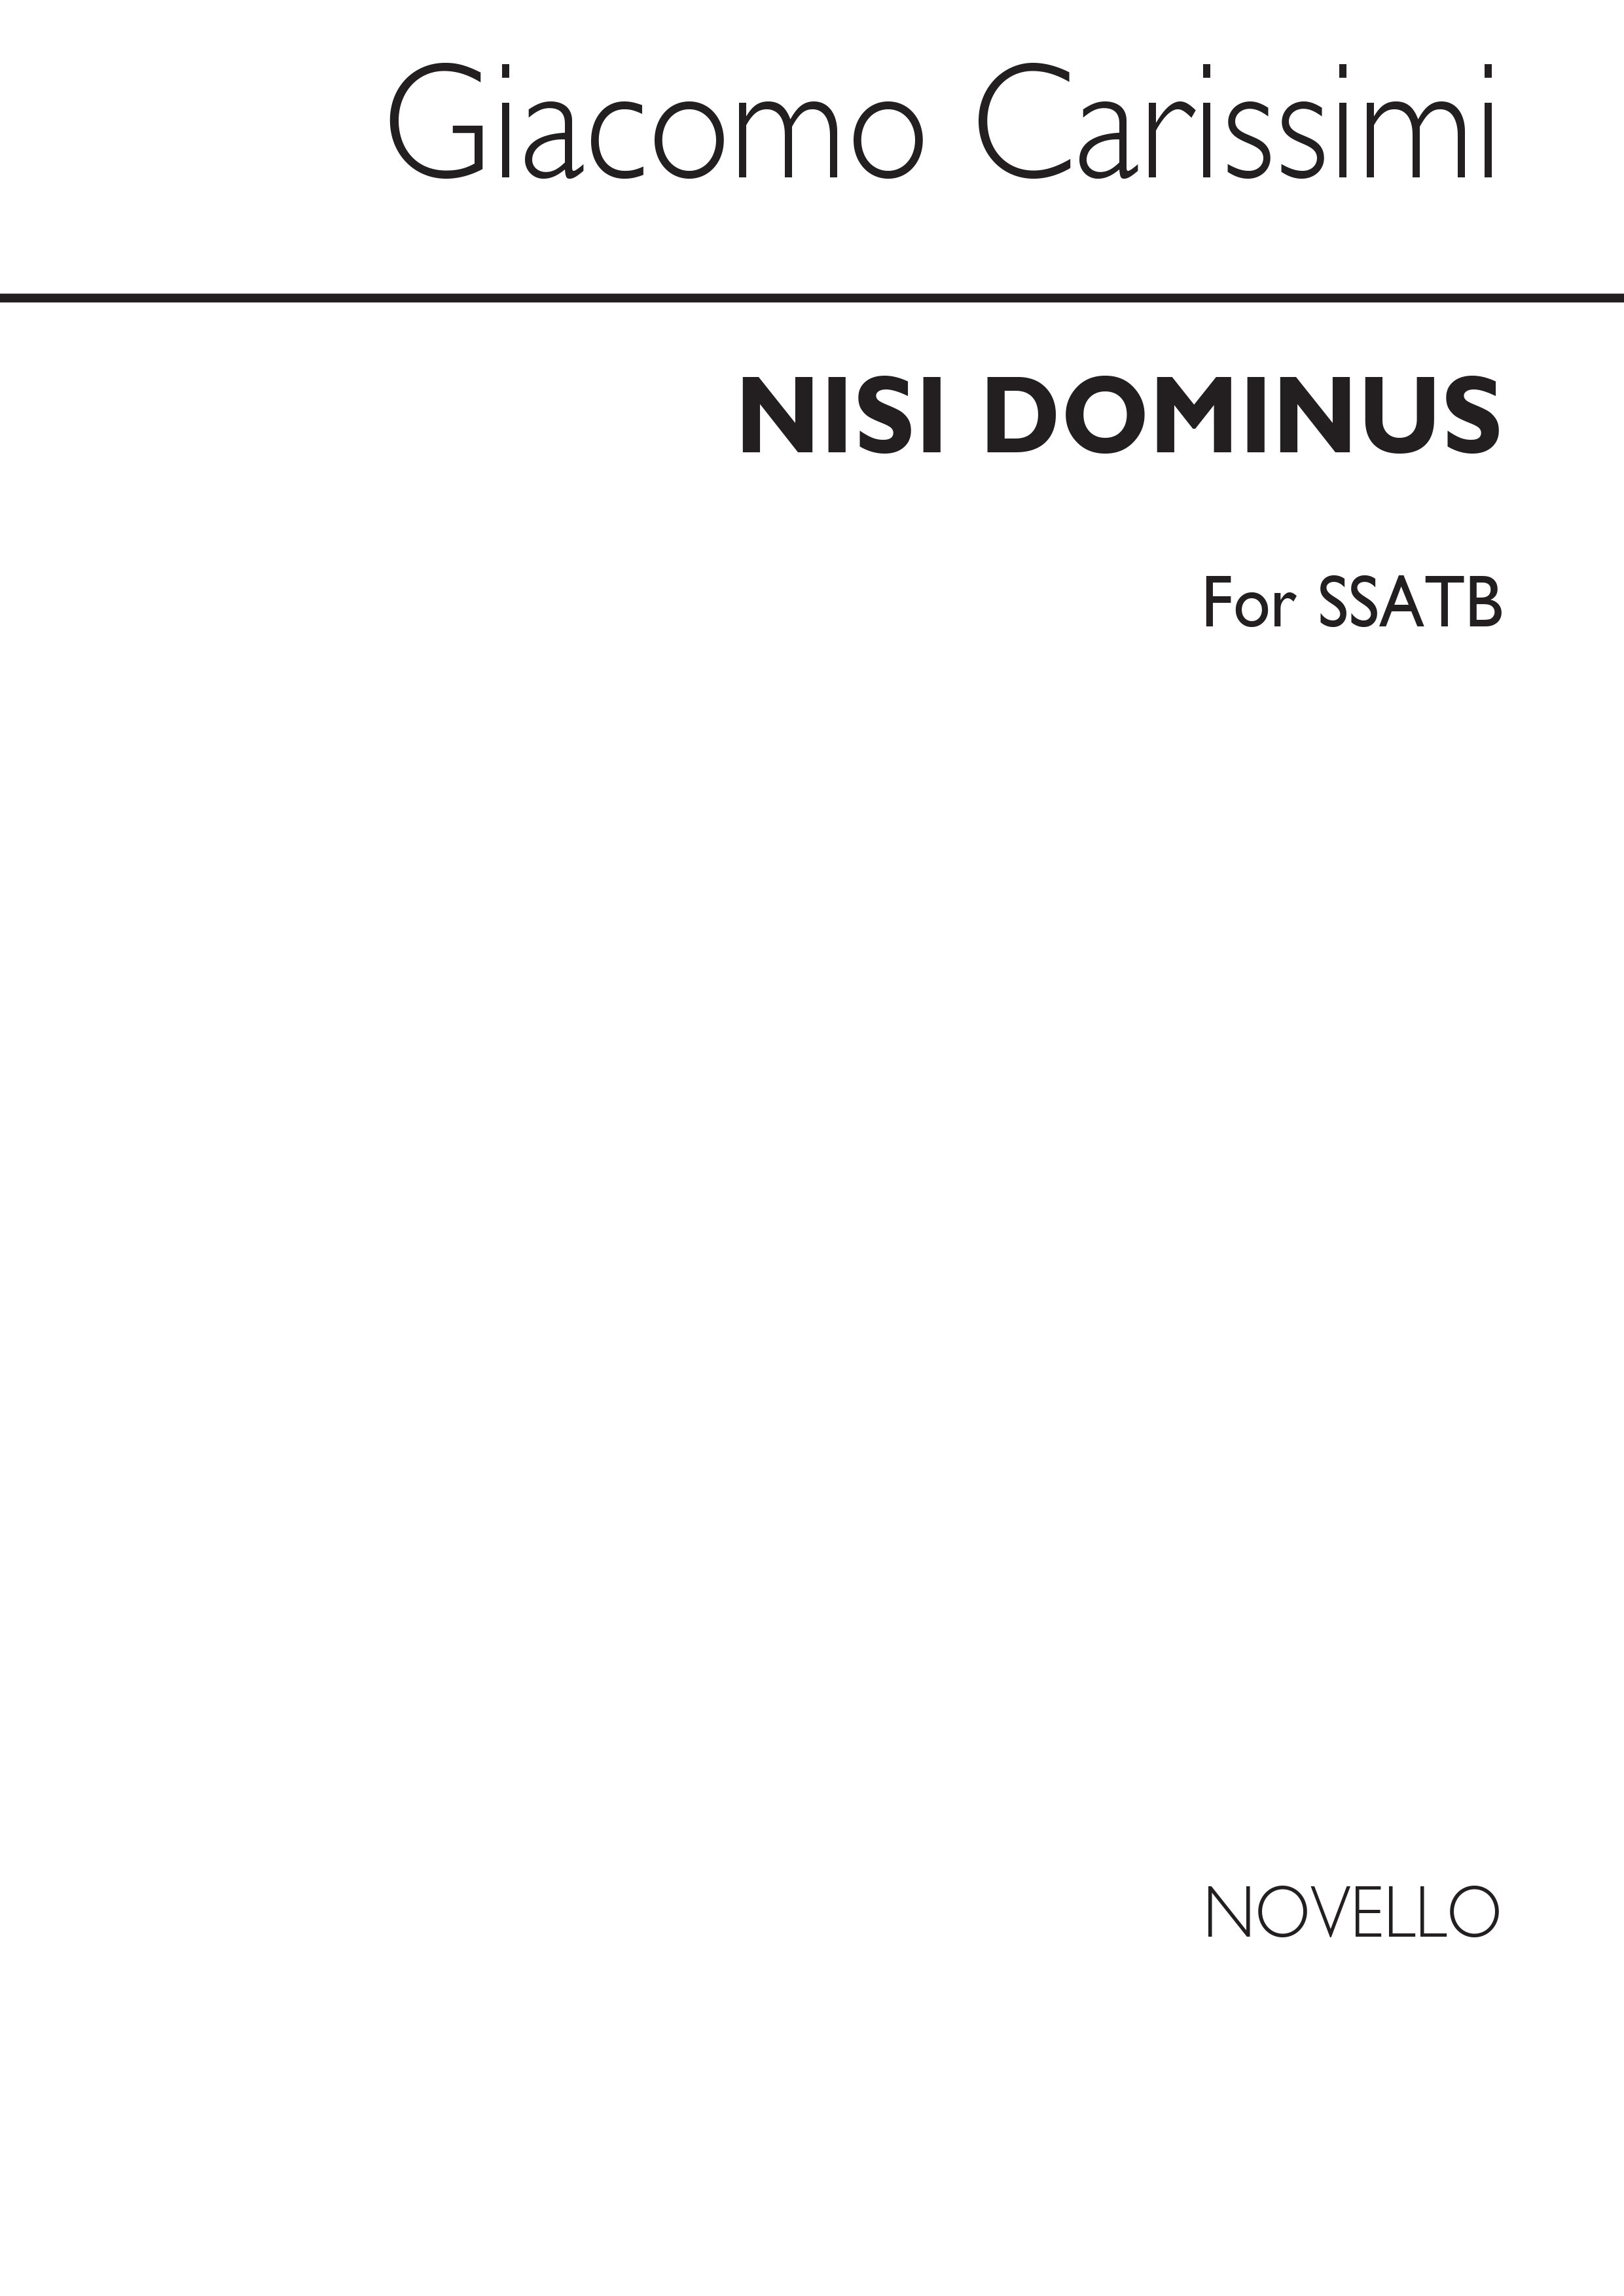 Giacomo Carissimi: Nisi Dominus (SSATB)